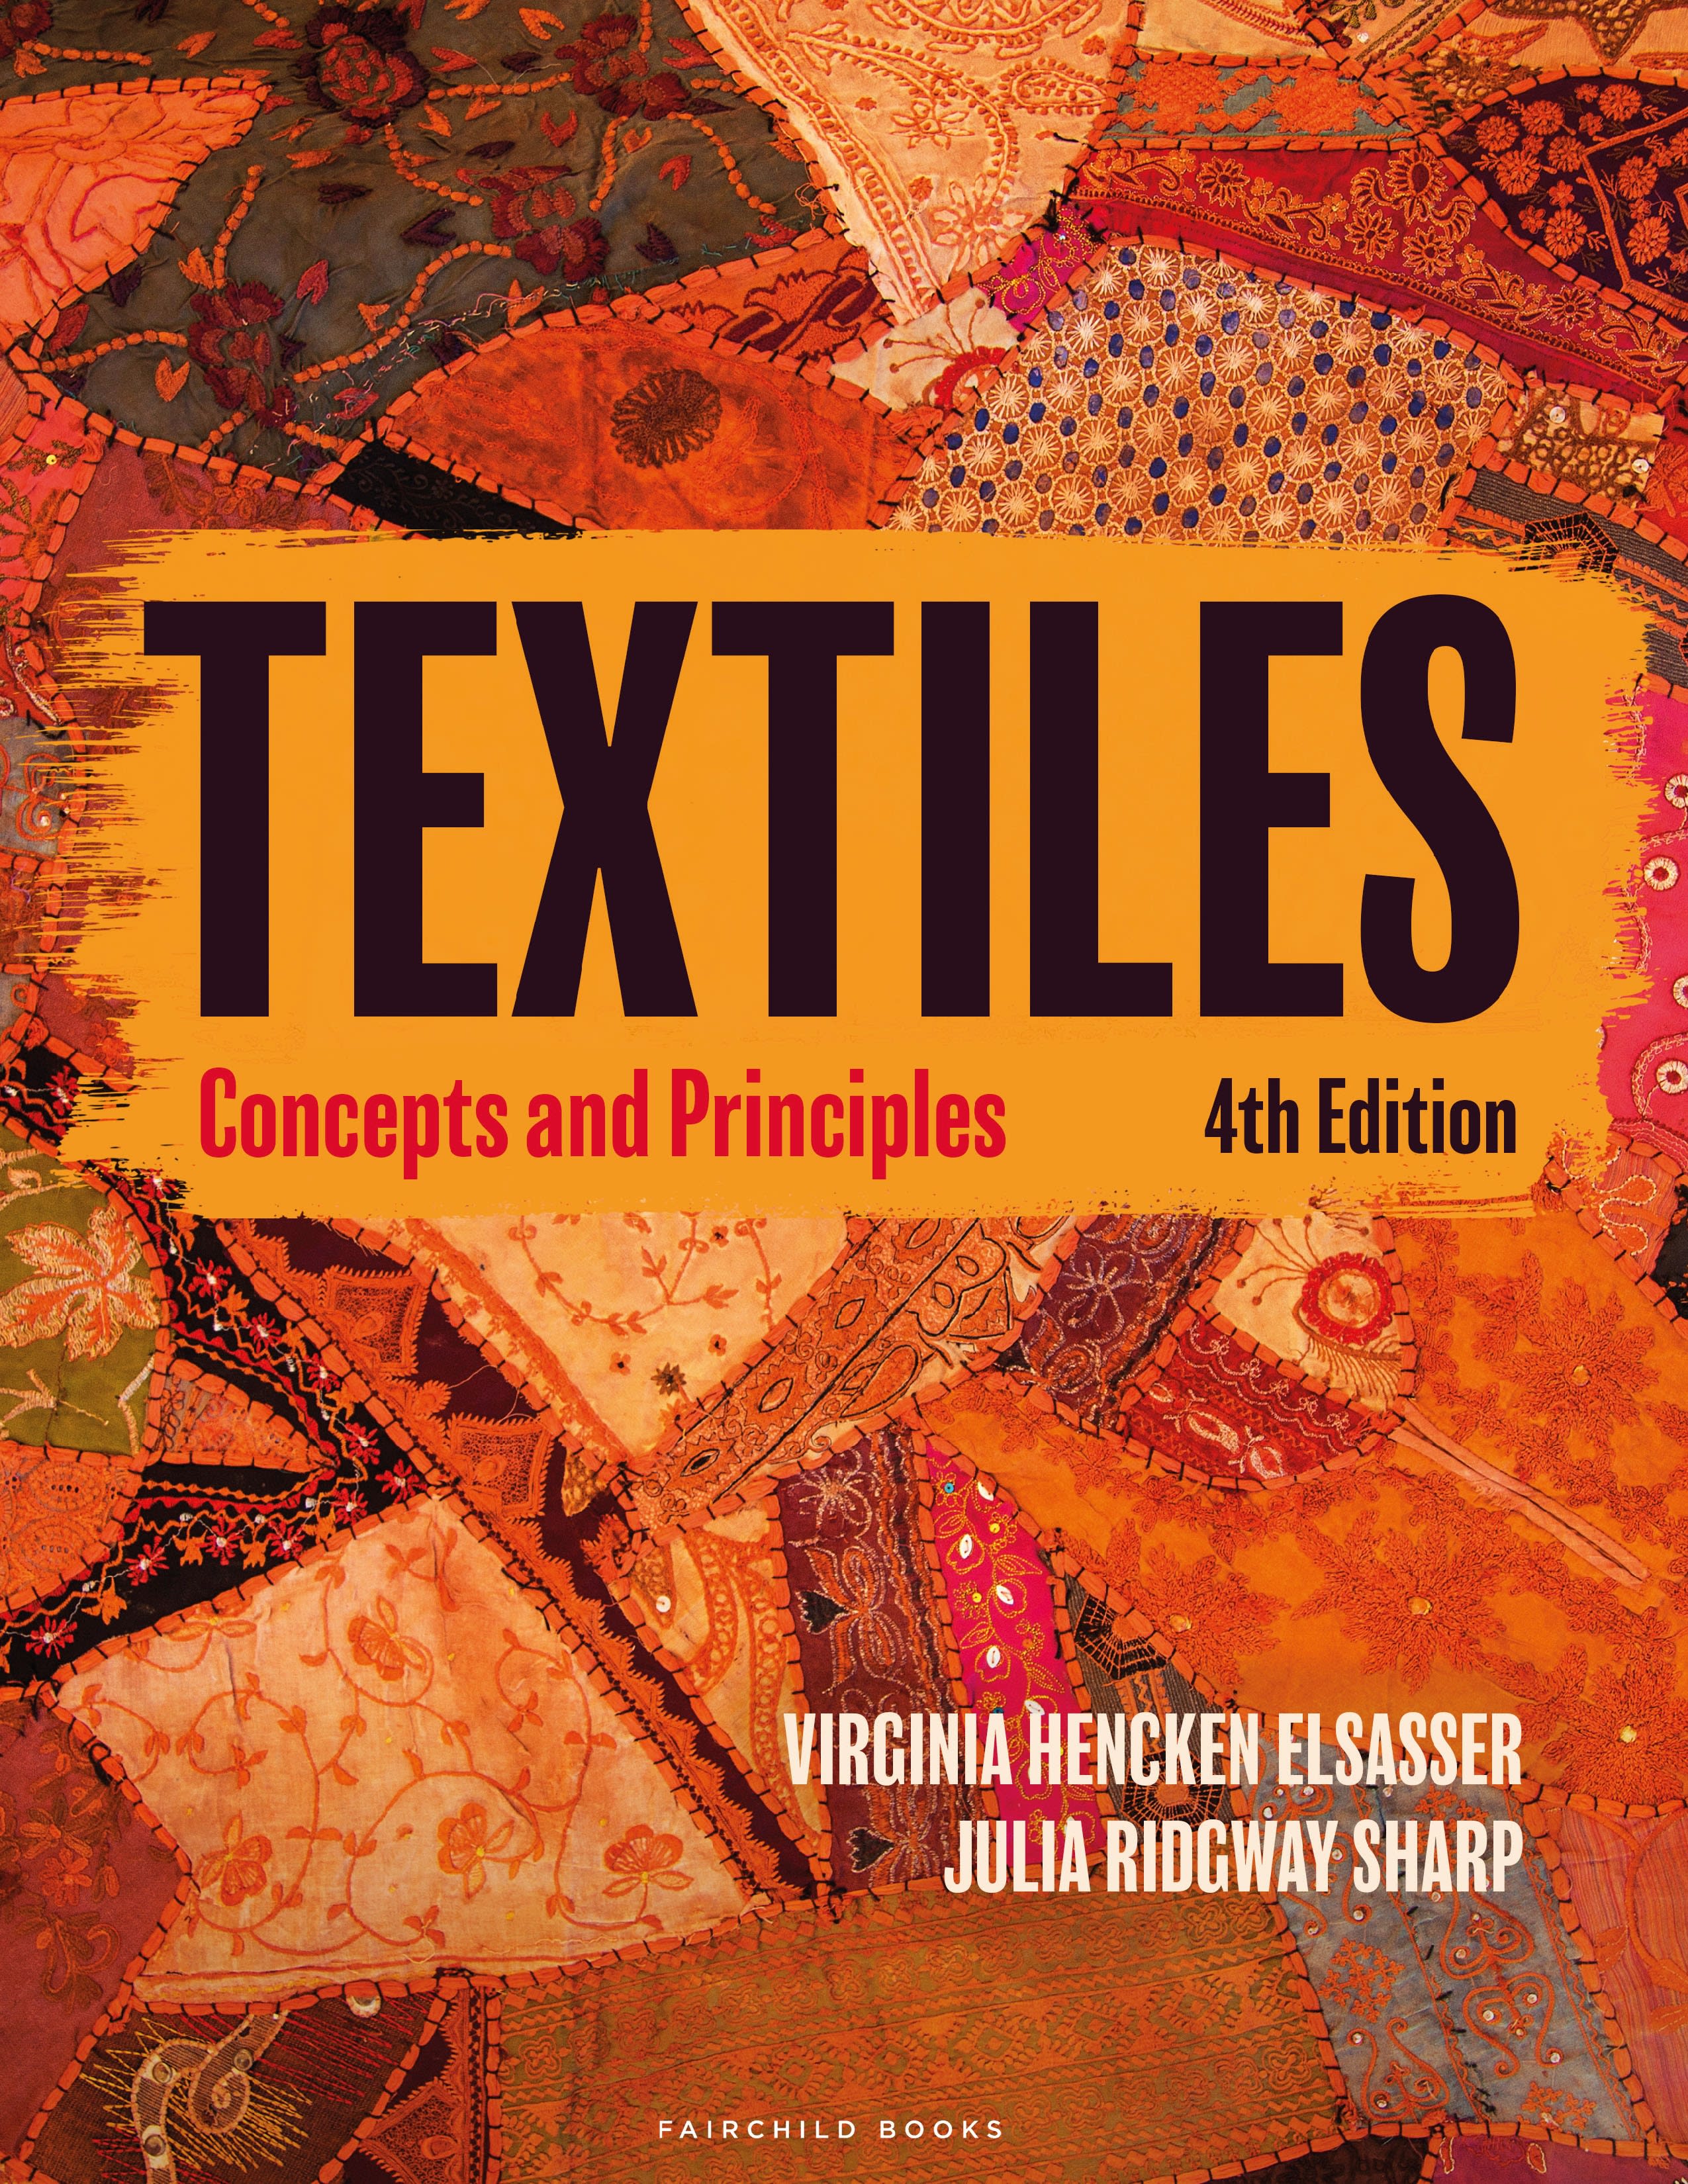 Textiles: Concepts and Principles book cover